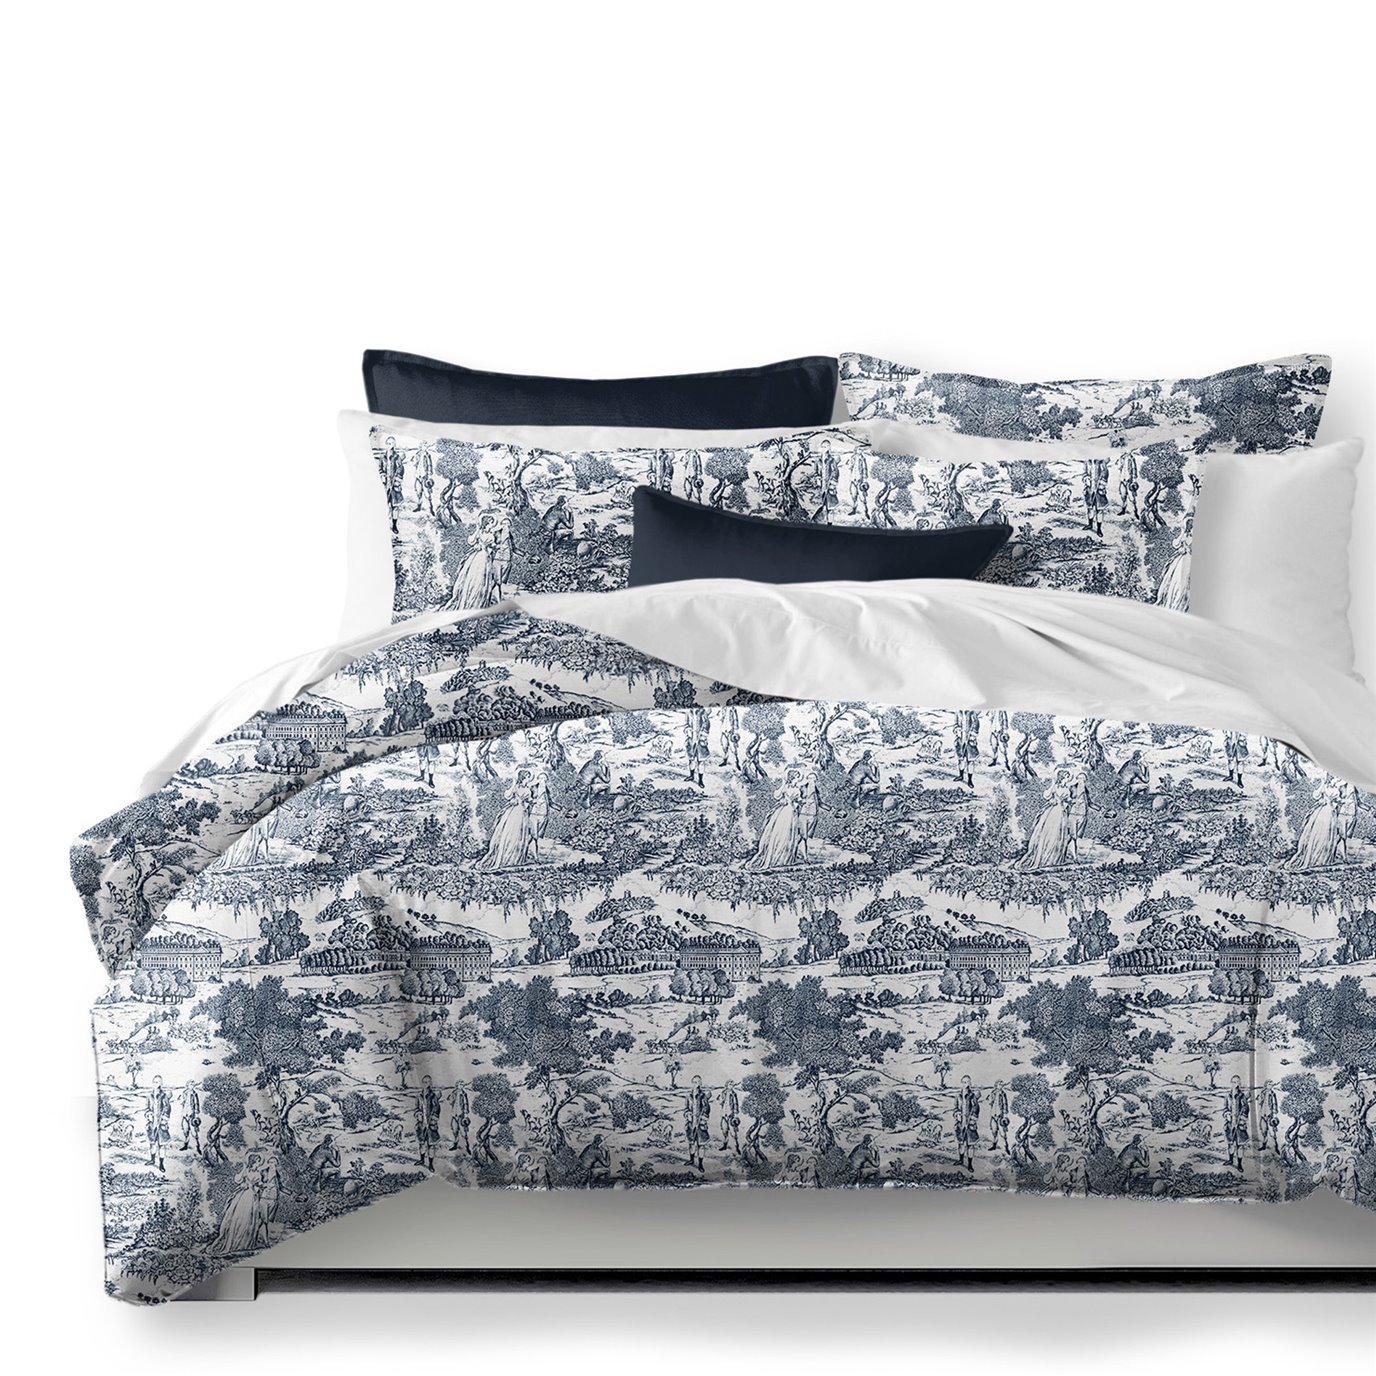 Beau Toile Blue Comforter and Pillow Sham(s) Set - Size Super Queen